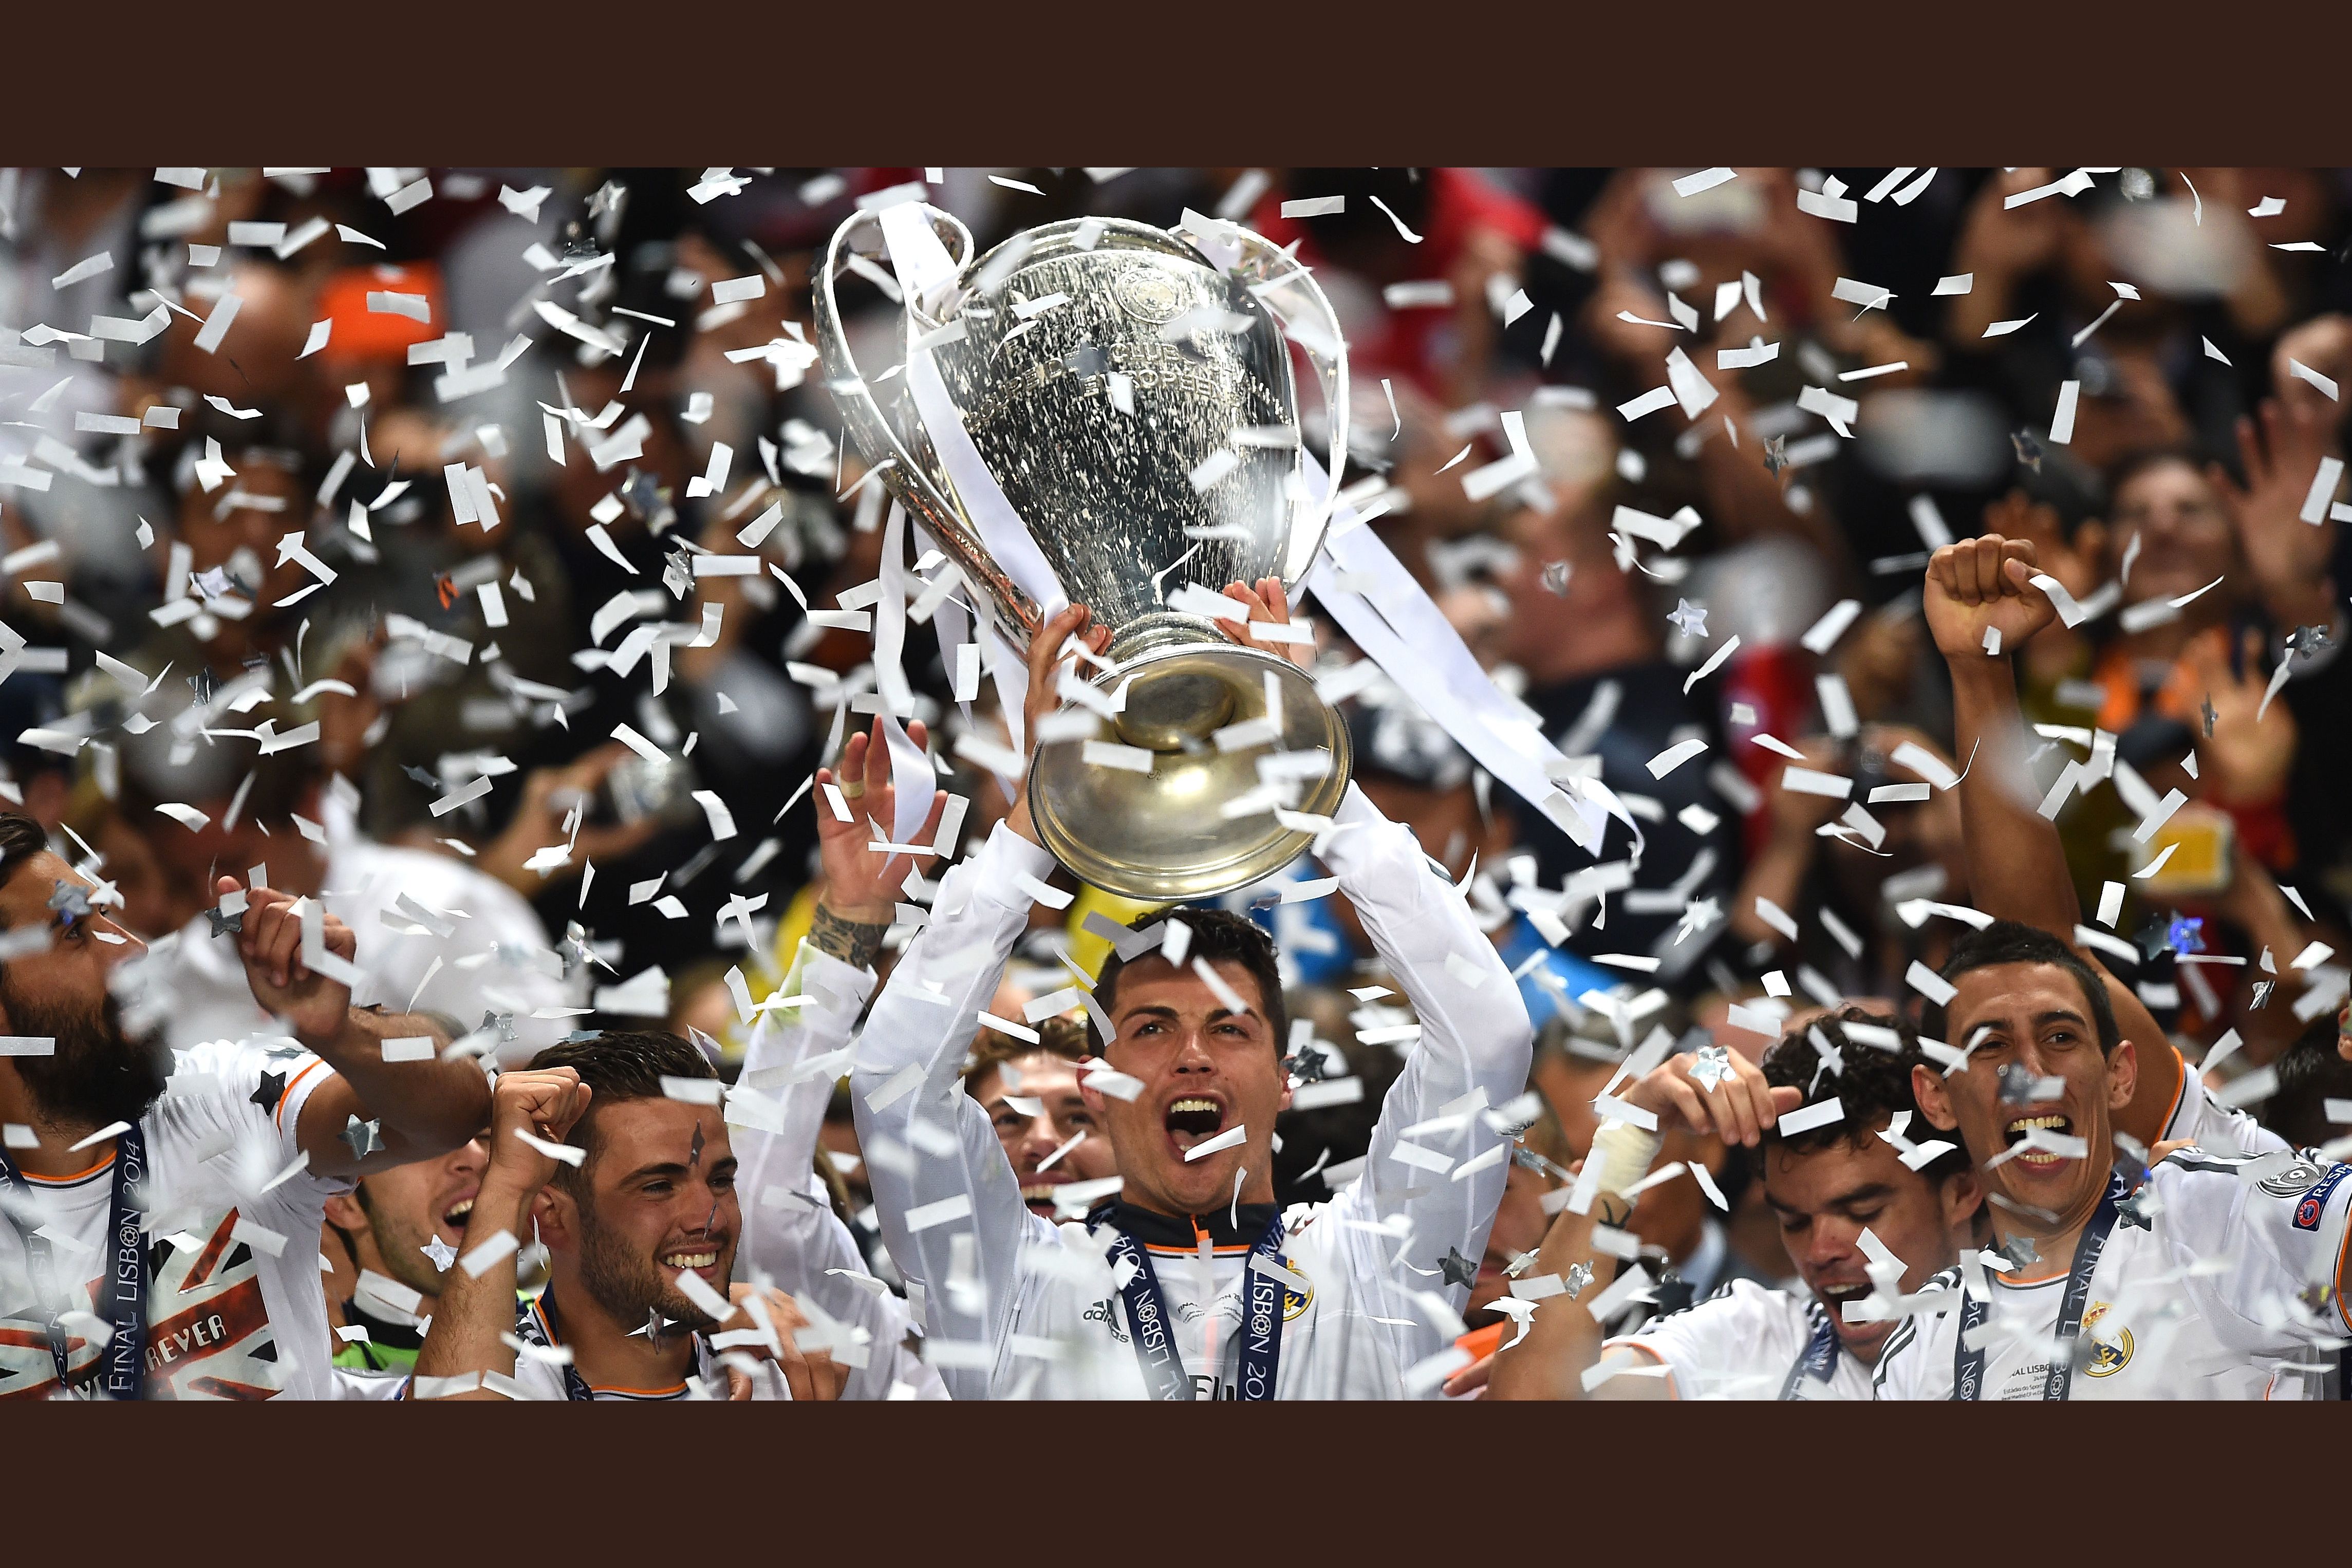 Football final. Реал Мадрид 2014 лига чемпионов. Cristiano Ronaldo Кубок Лиги чемпионов Реал. Финал Лиги чемпионов 2014 Роналду. Обои Реал Мадрид лига чемпионов.